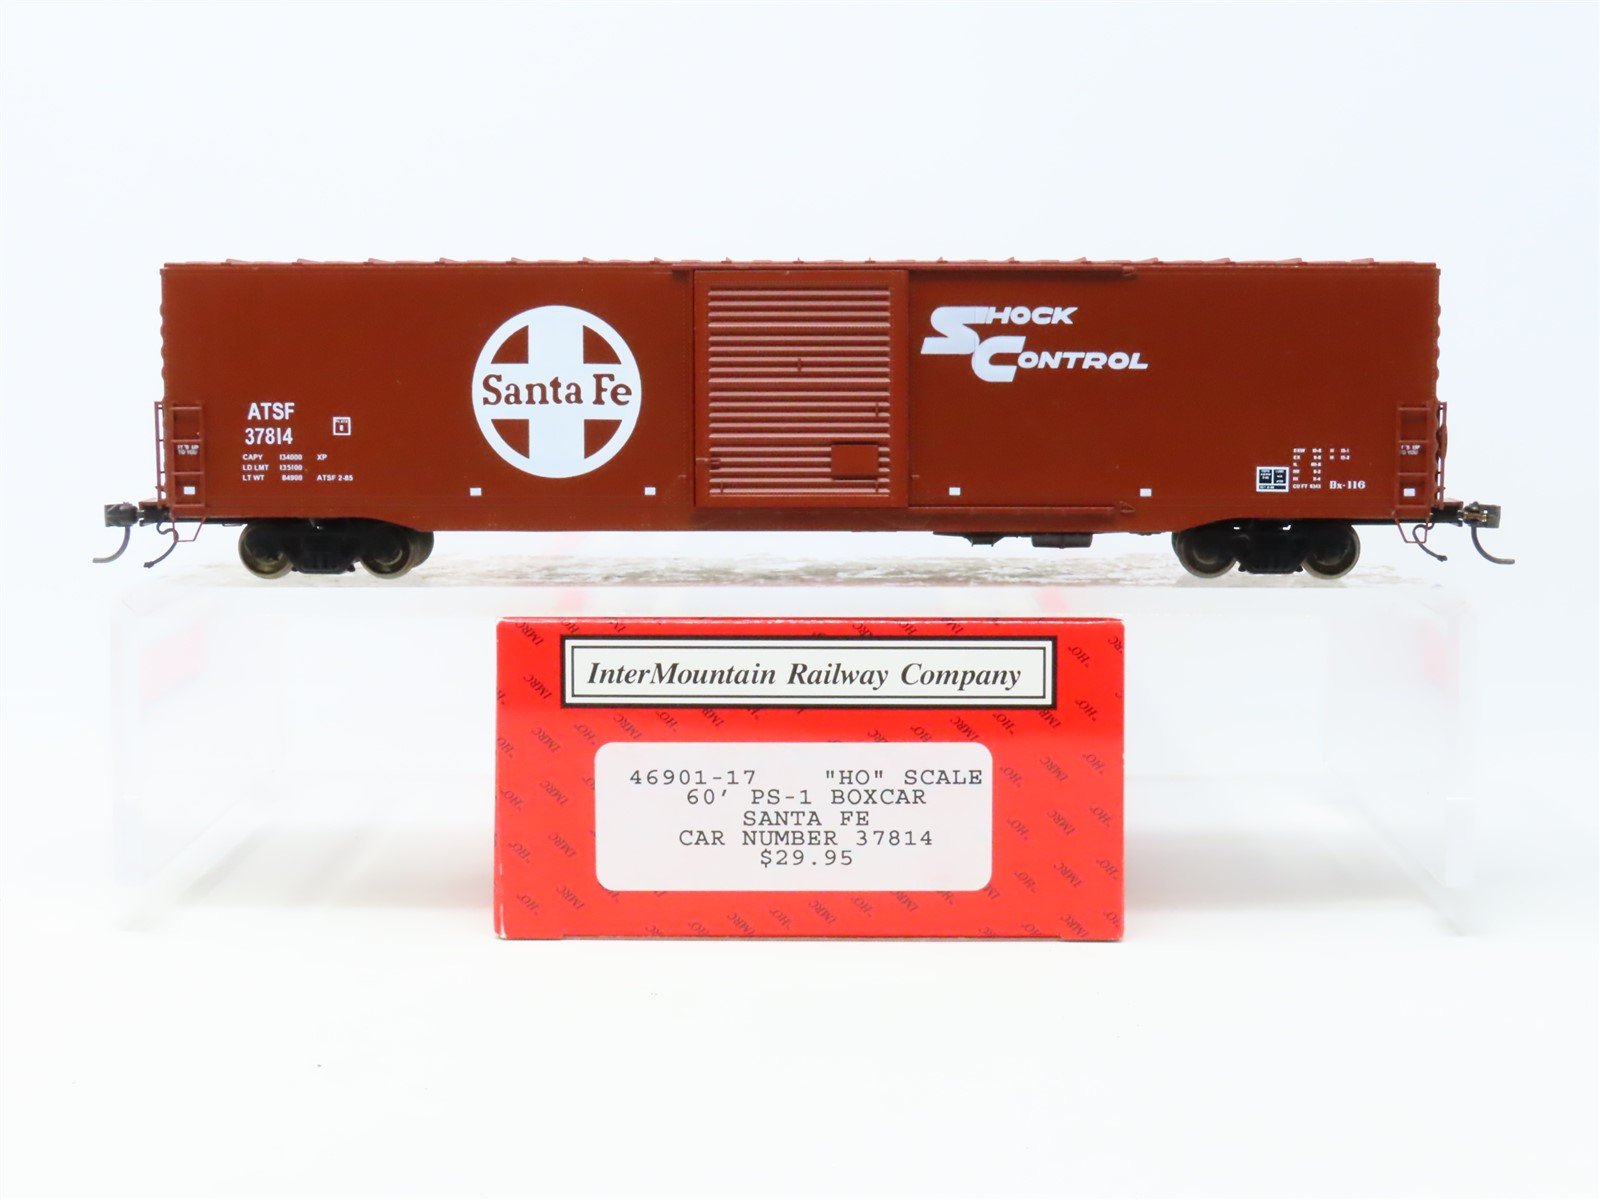 HO Scale InterMountain 46901-17 ATSF Santa Fe "Shock Control" Box Car #37814